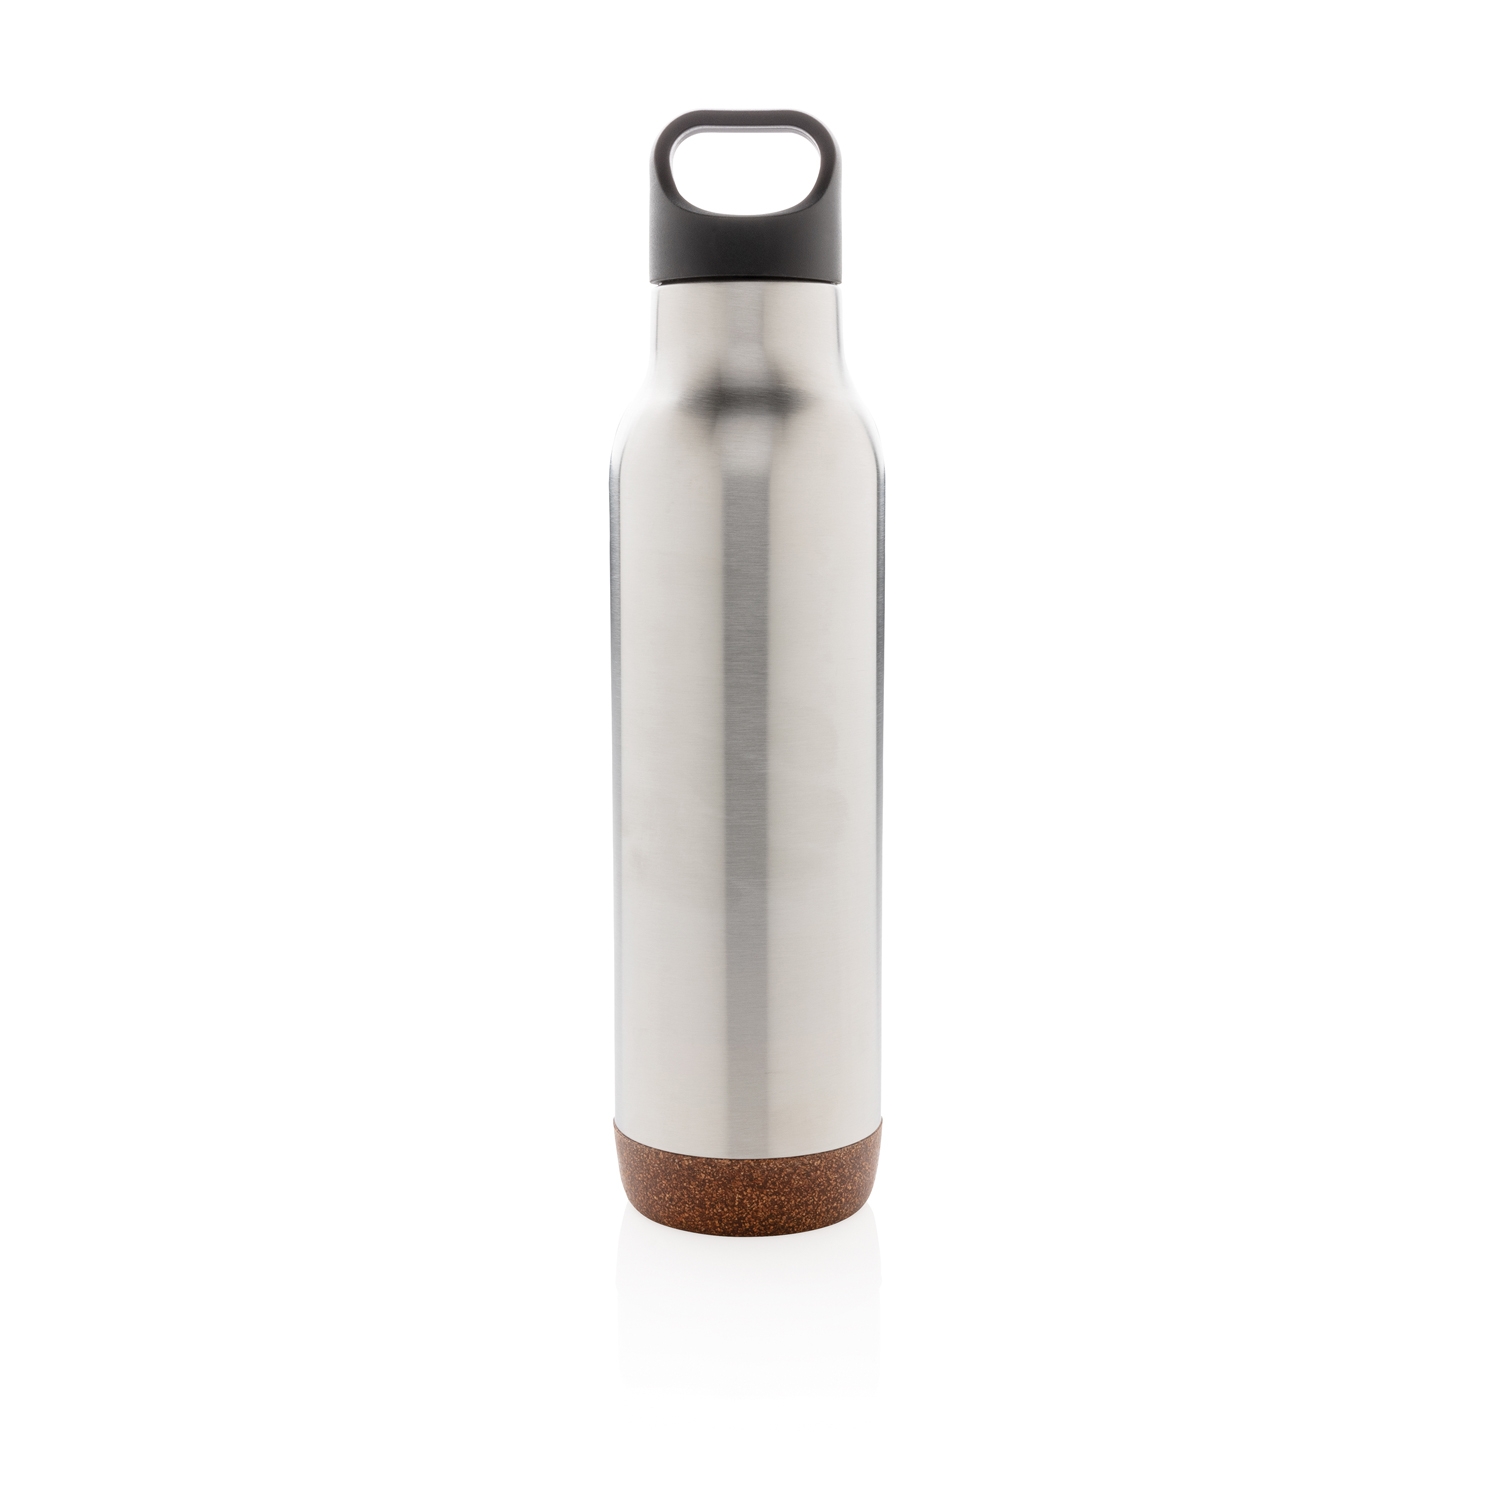 Герметичная вакуумная бутылка Cork, 600 мл, серебристый, нержавеющая сталь; pp